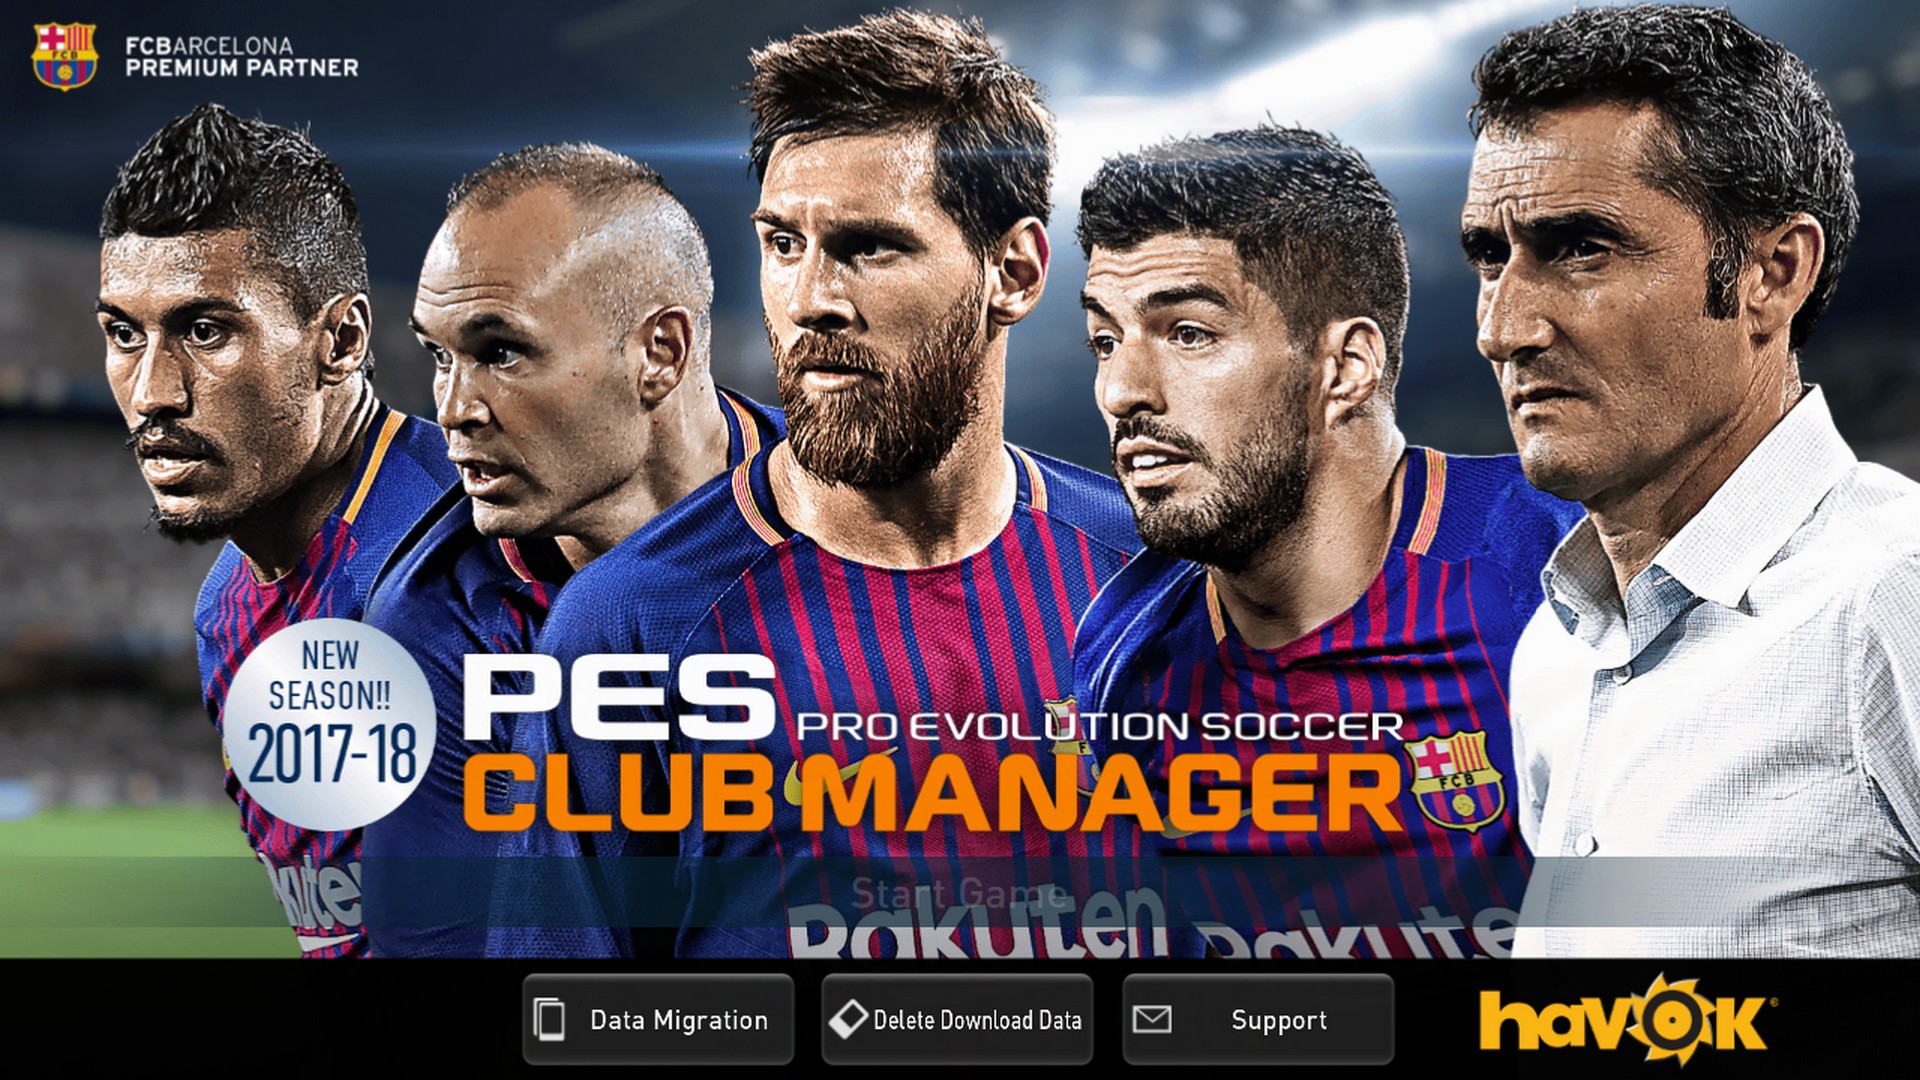 Pes manager. Konami PES Manager. PES Club Manager logo. Goal! The Club Manager.